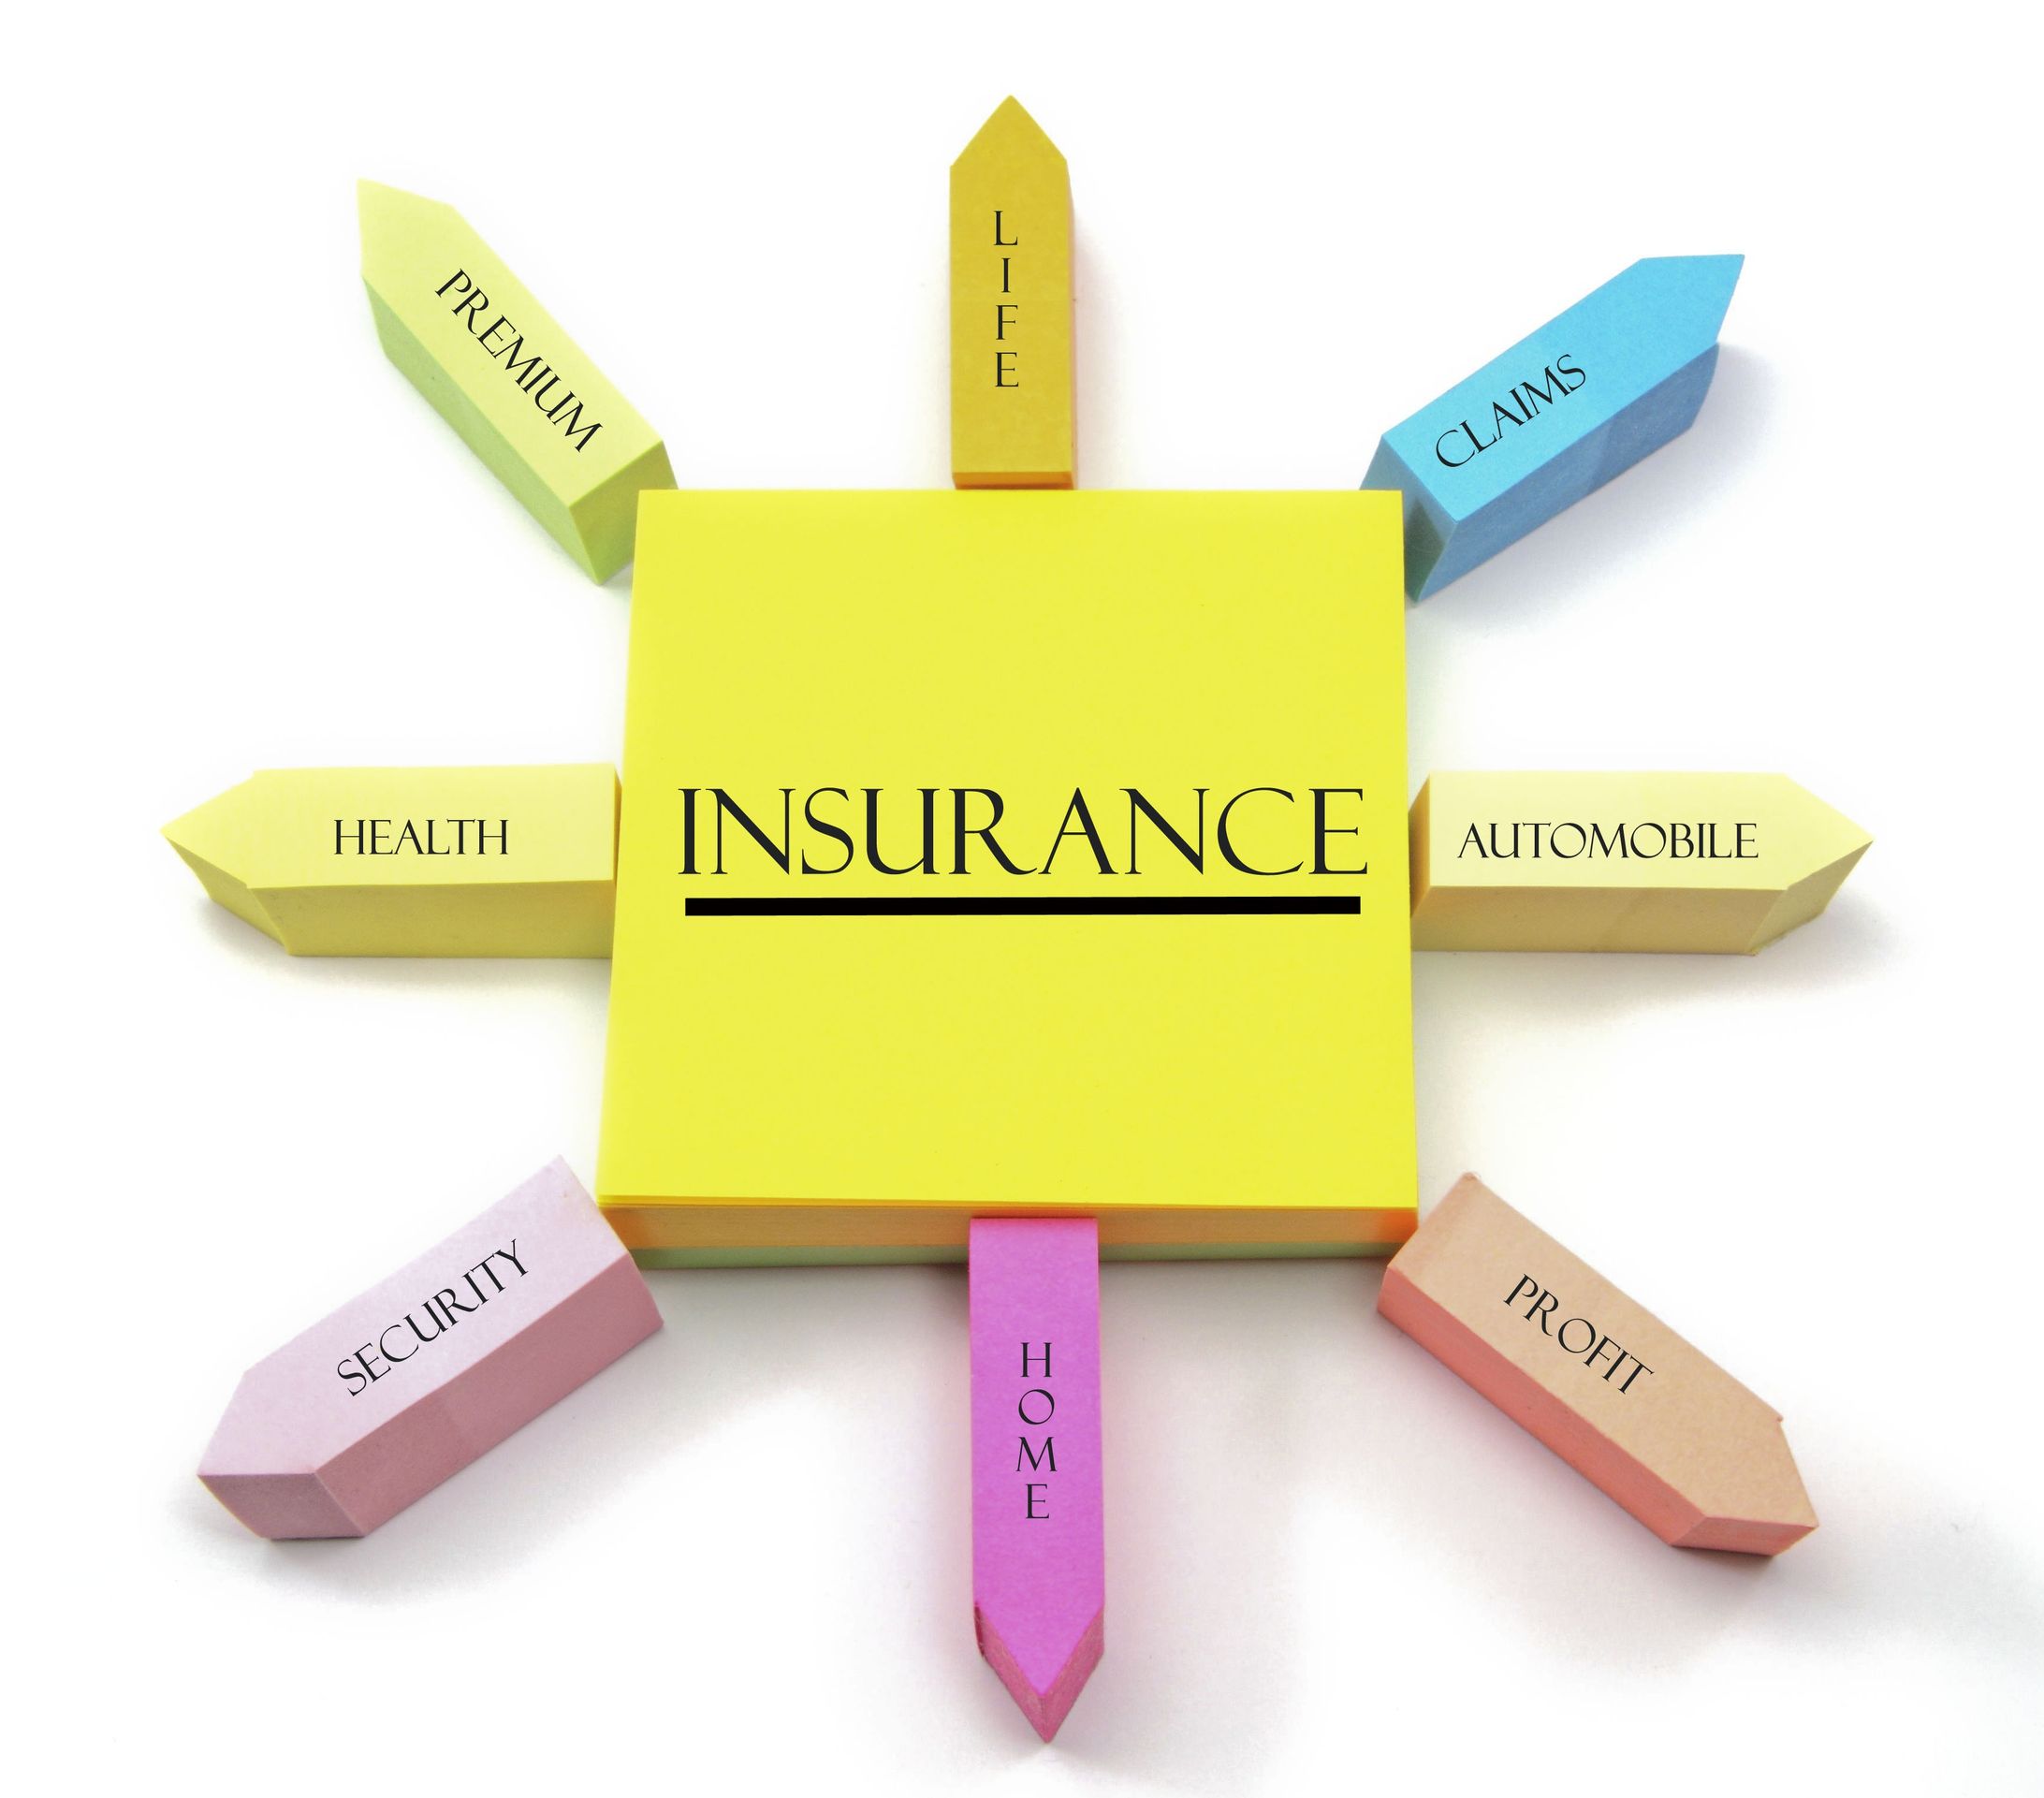 Understanding how healthcare insurance has changed